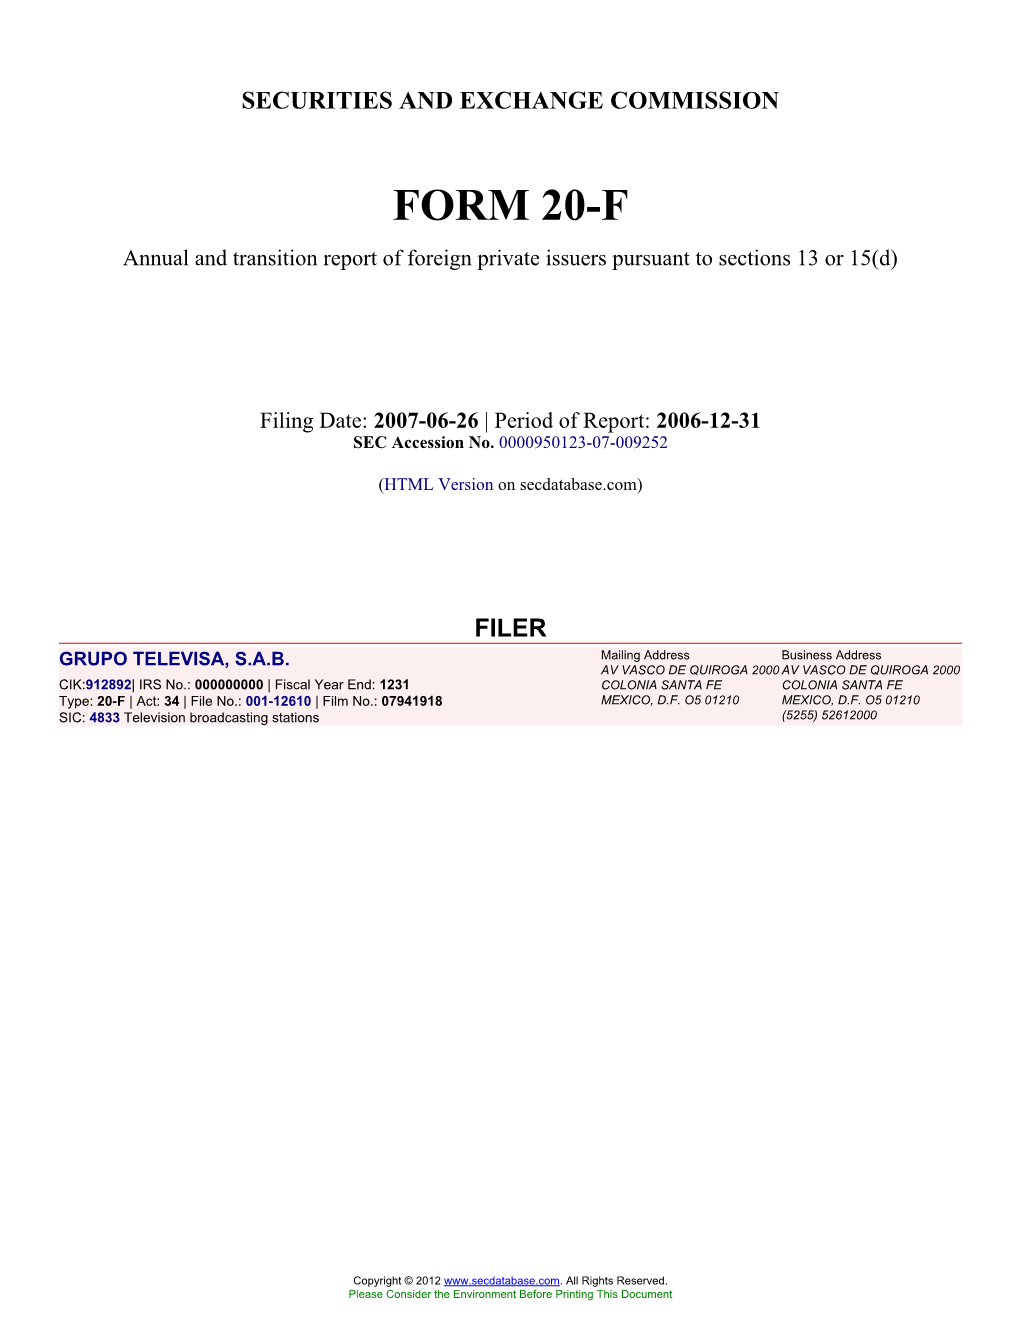 GRUPO TELEVISA, S.A.B. (Form: 20-F, Filing Date: 06/26/2007)